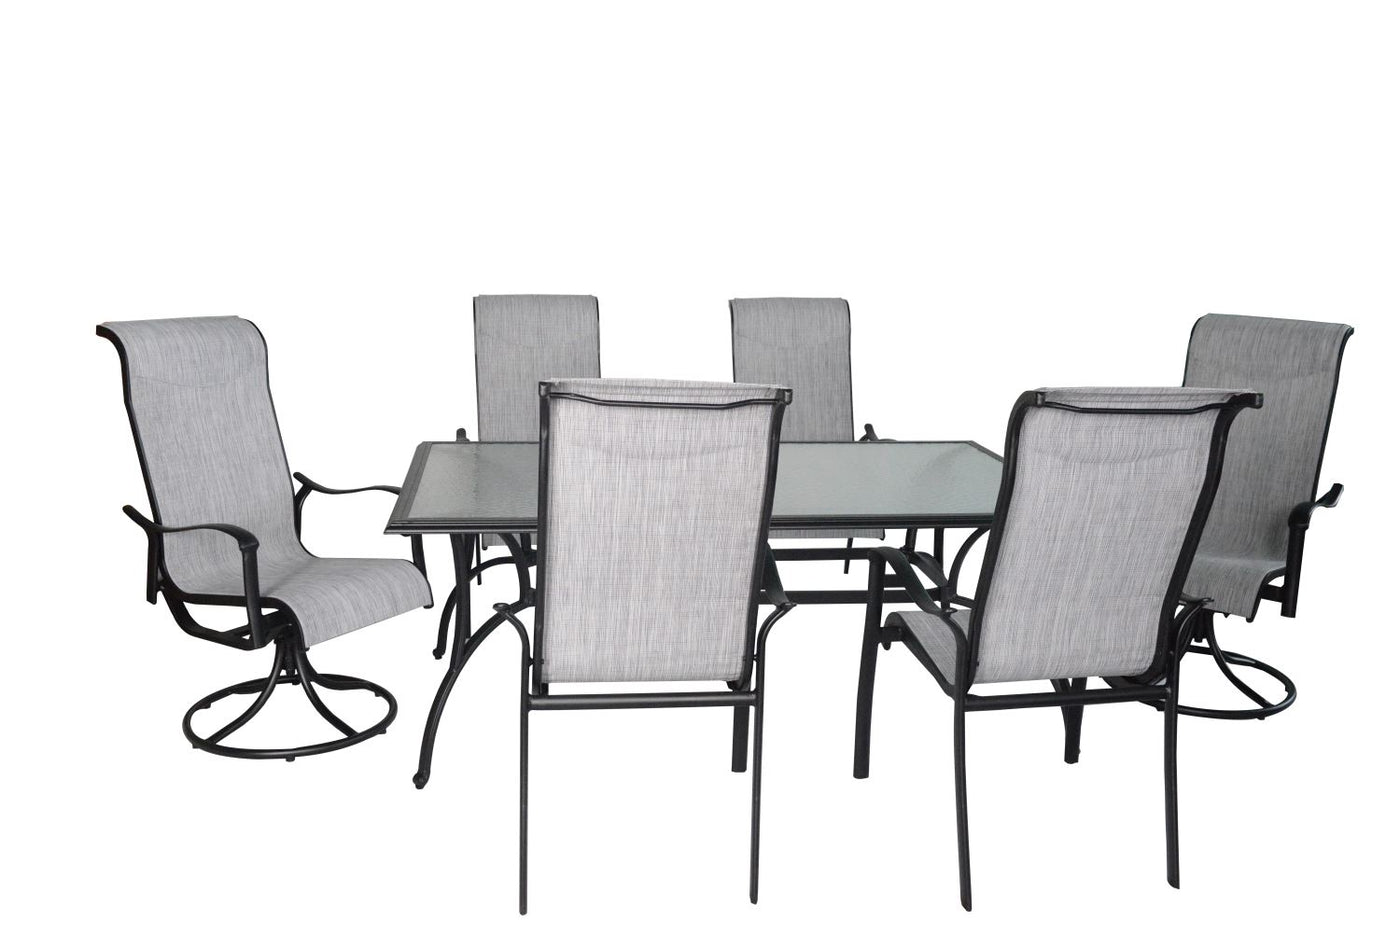 Hanlan Outdoor Swivel Sling Dining Chair - Set of 2 - Charcoal/Light Grey